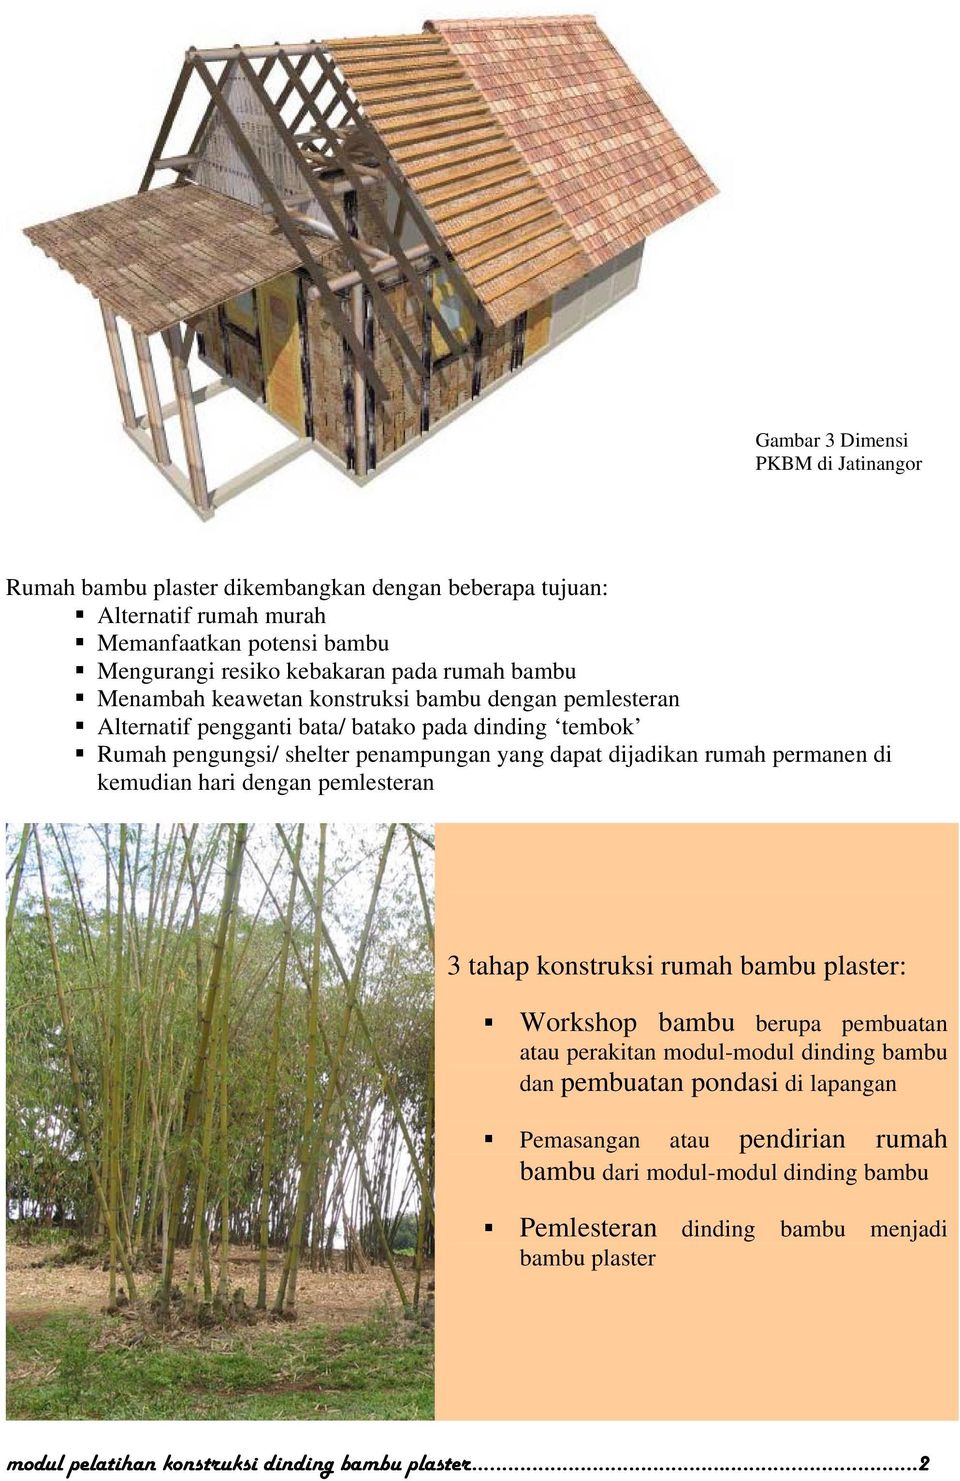 permanen di kemudian hari dengan pemlesteran 3 tahap konstruksi rumah bambu plaster: Workshop bambu berupa pembuatan atau perakitan modul-modul dinding bambu dan pembuatan